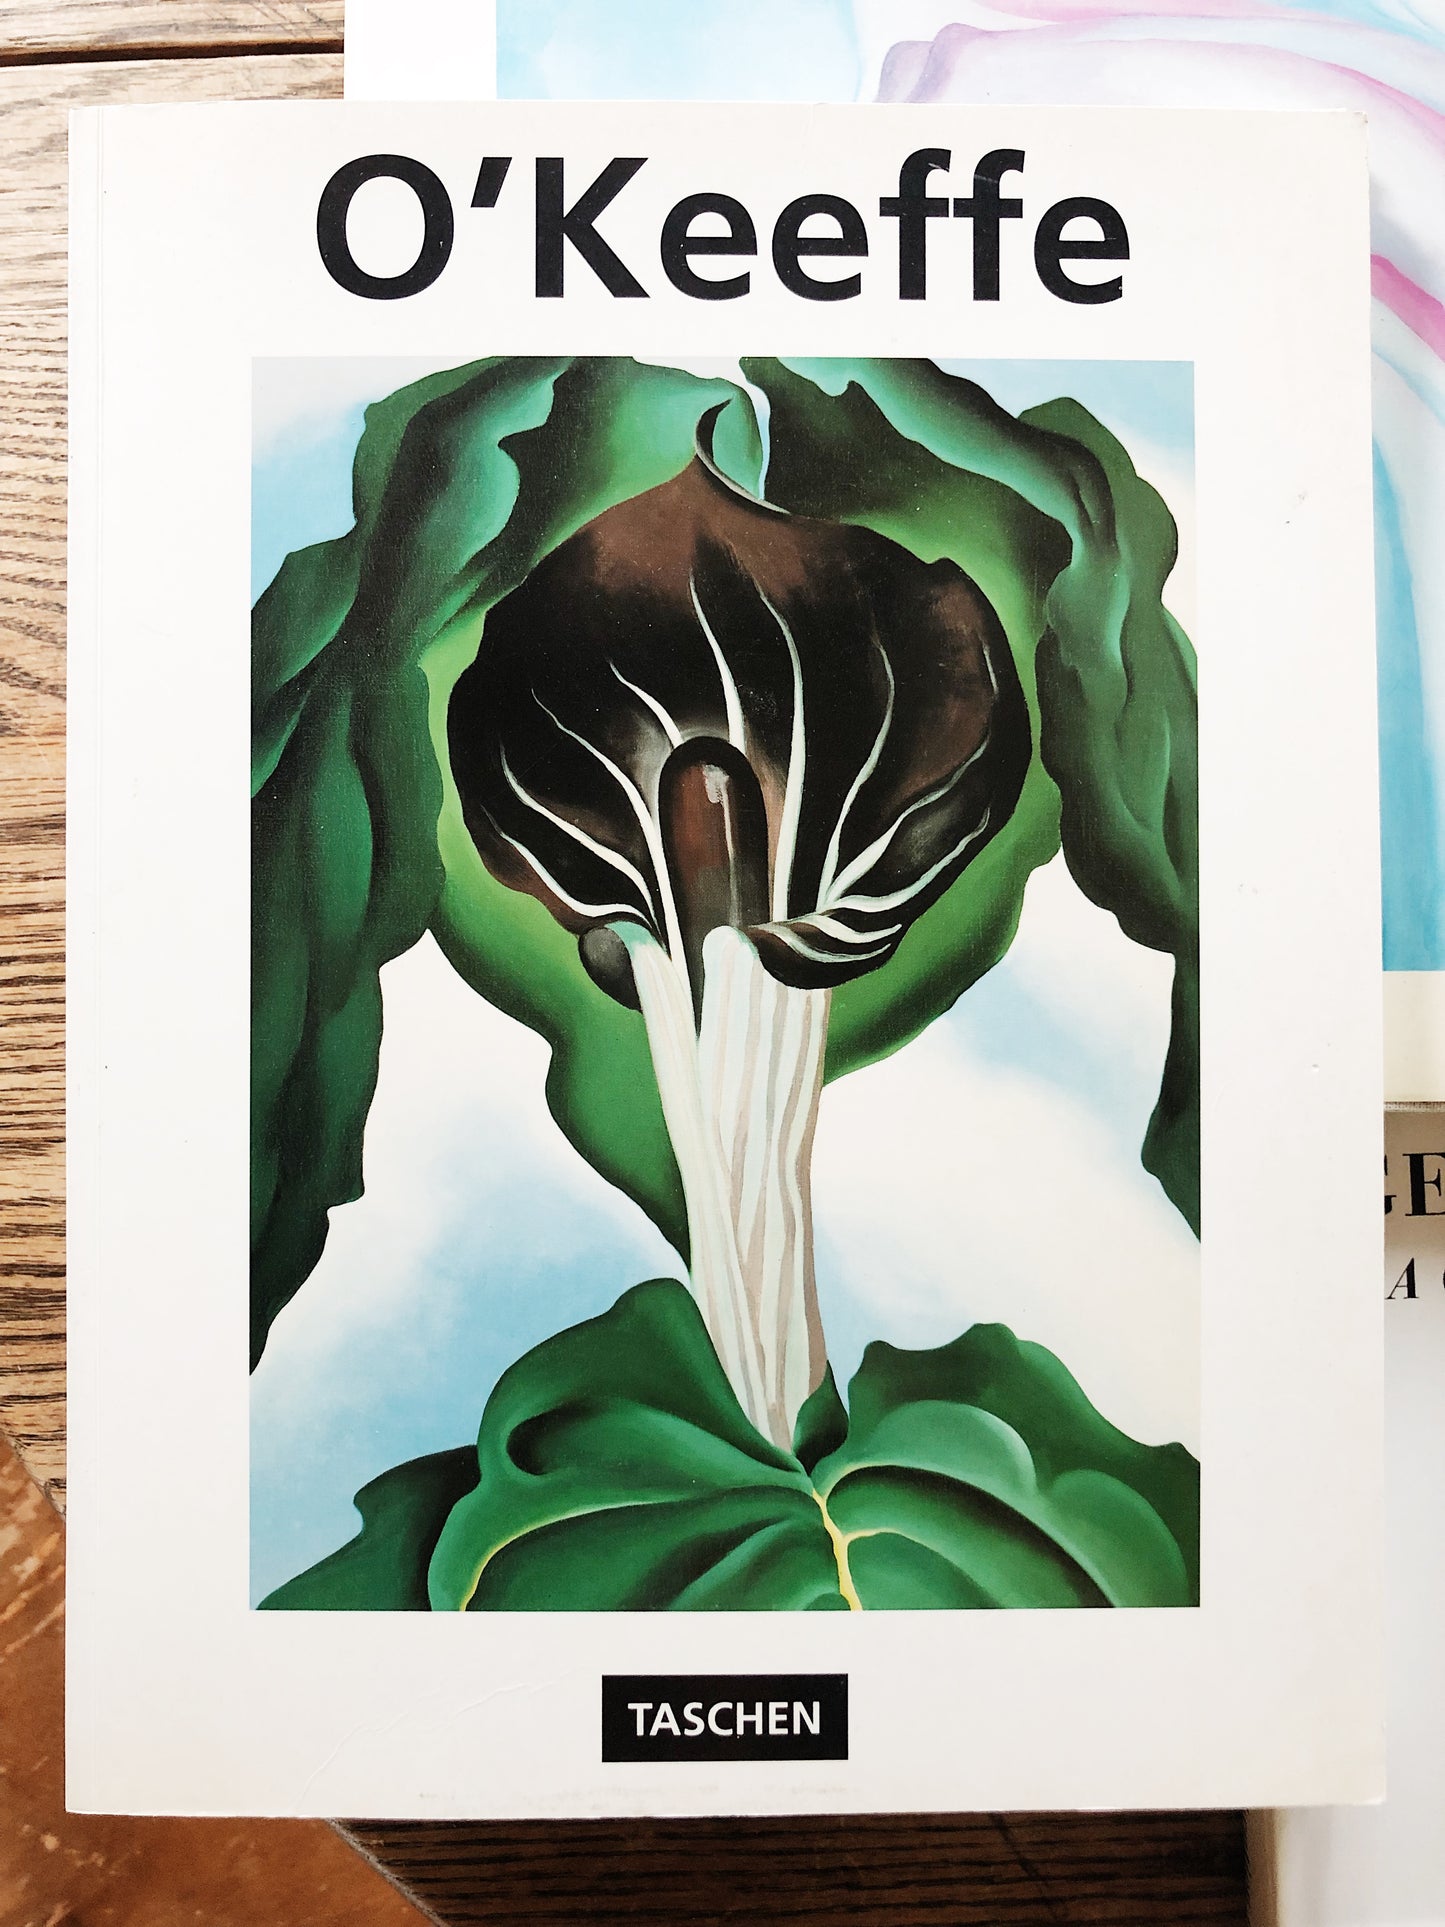 Vintage Georgia O’Keeffe Art Book